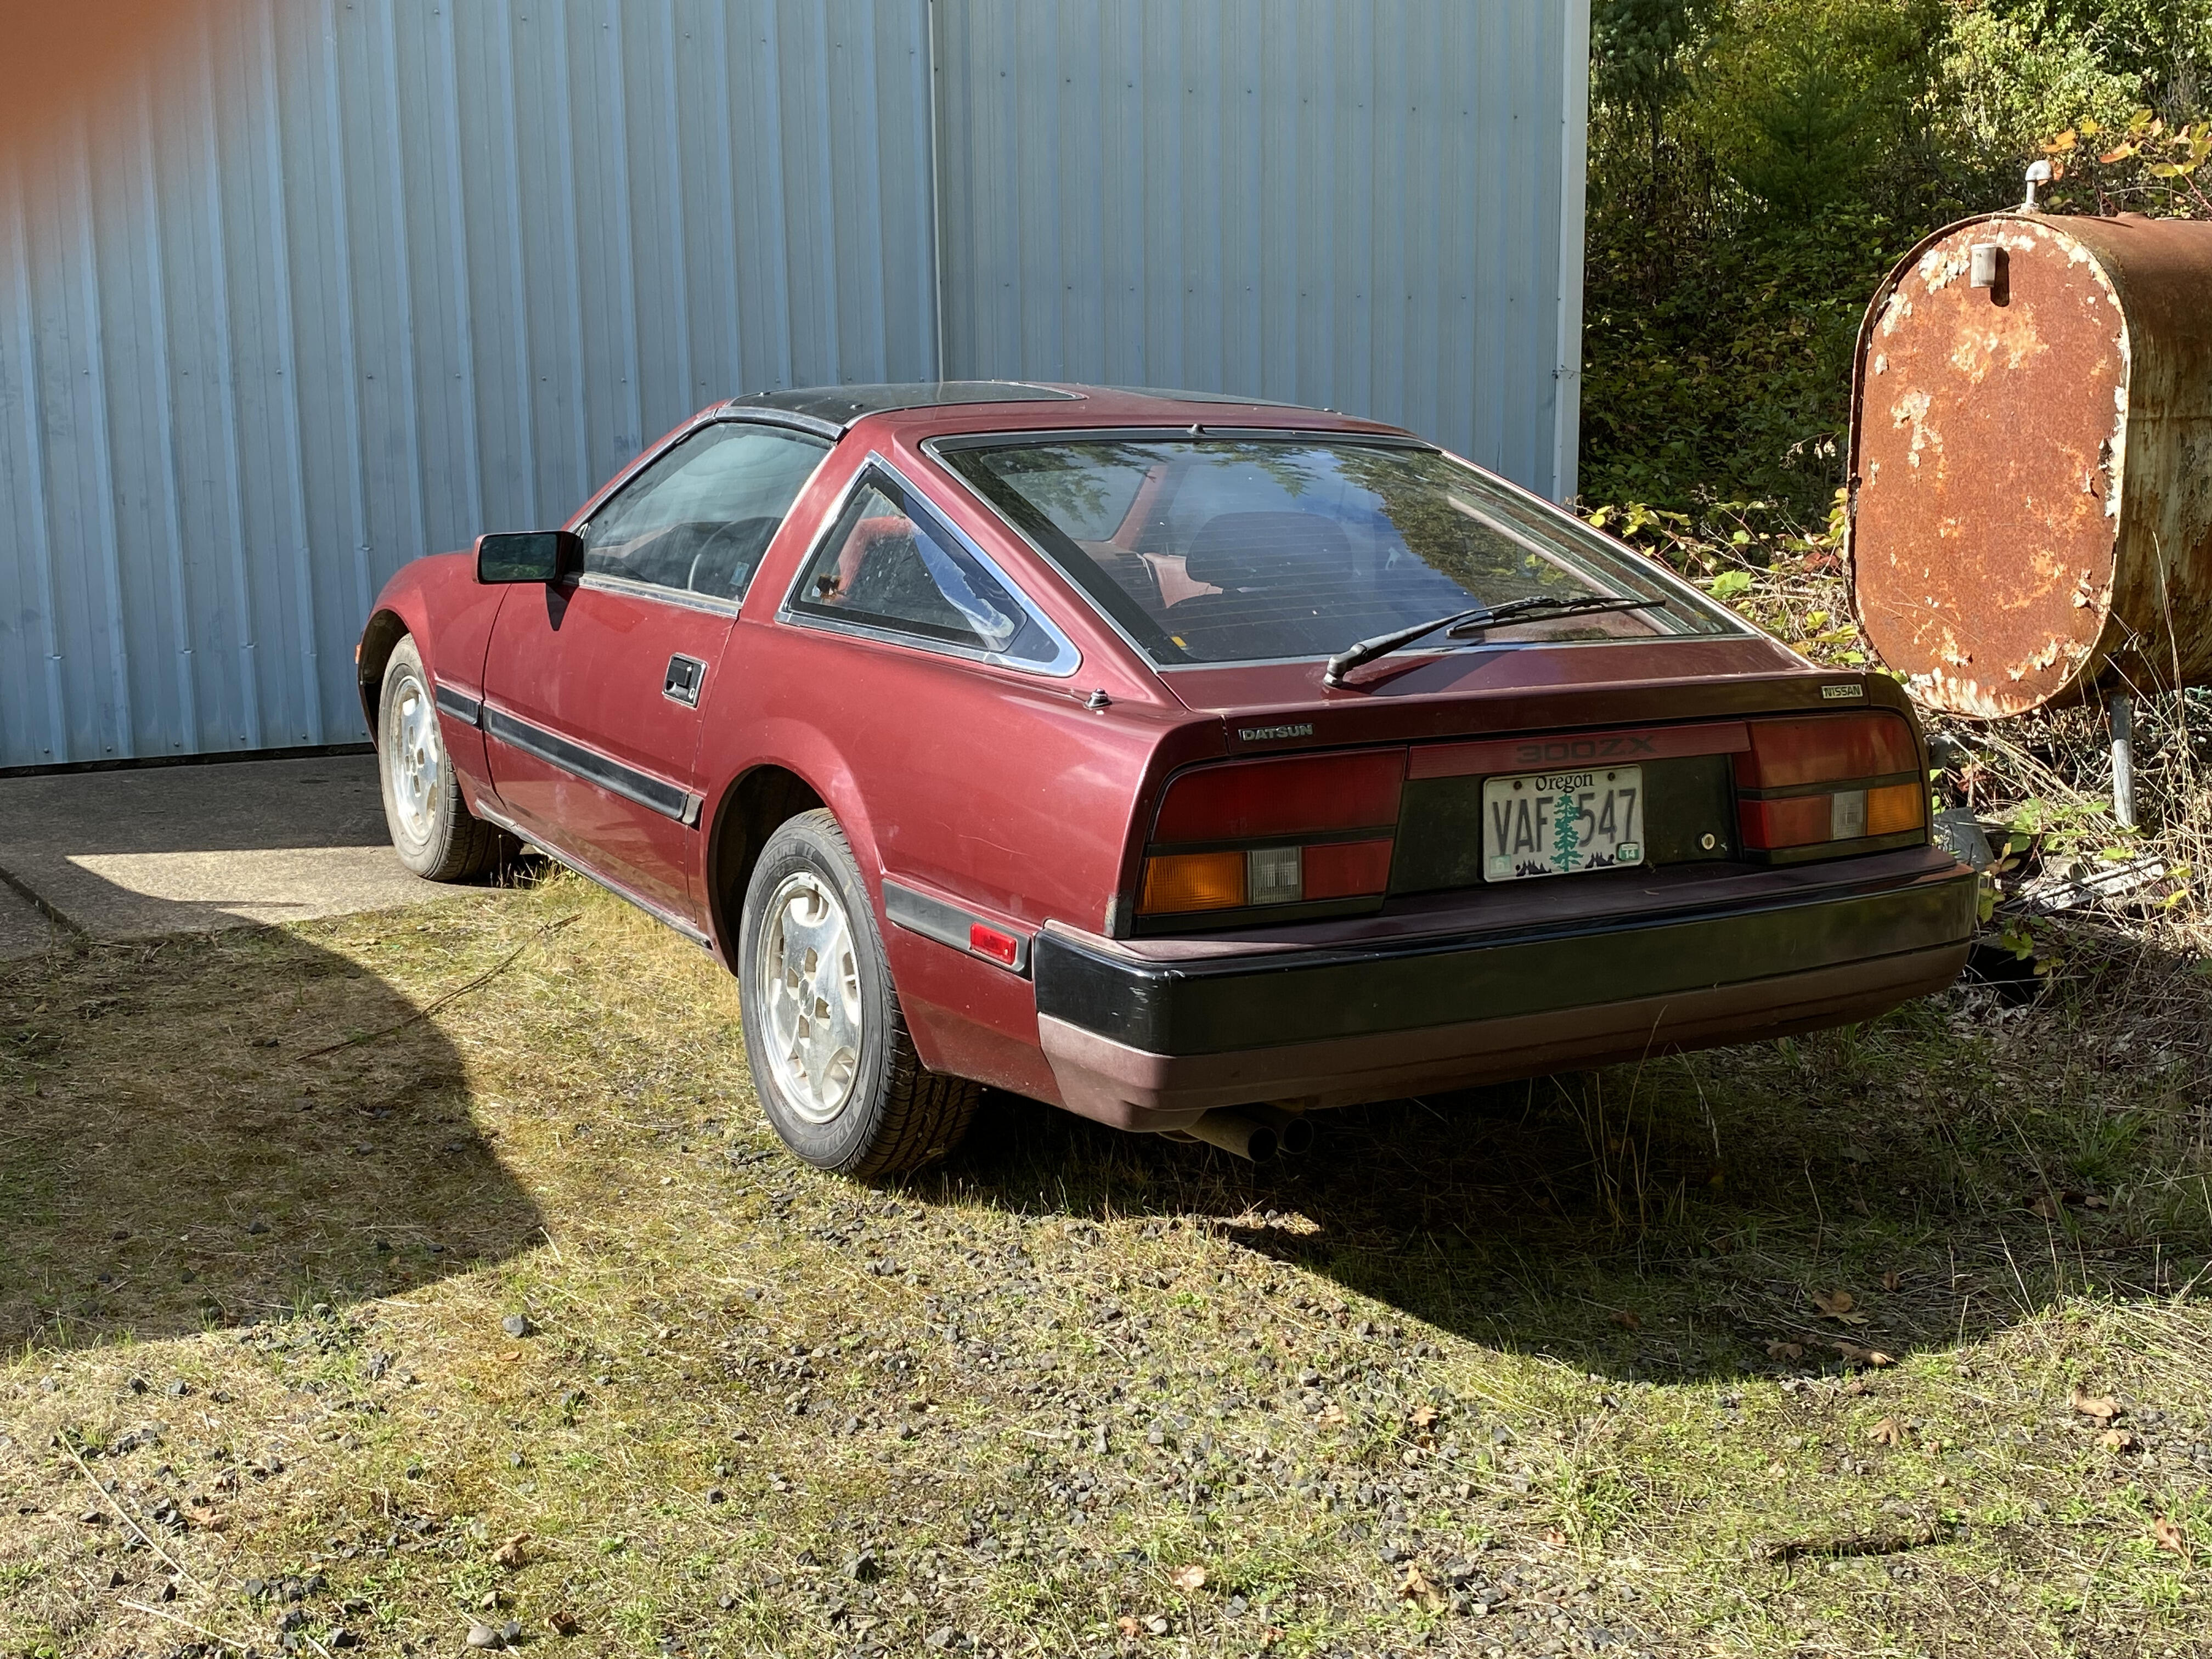 Beautiful 1984 Nissan 300ZX project – Barn Find! $3000